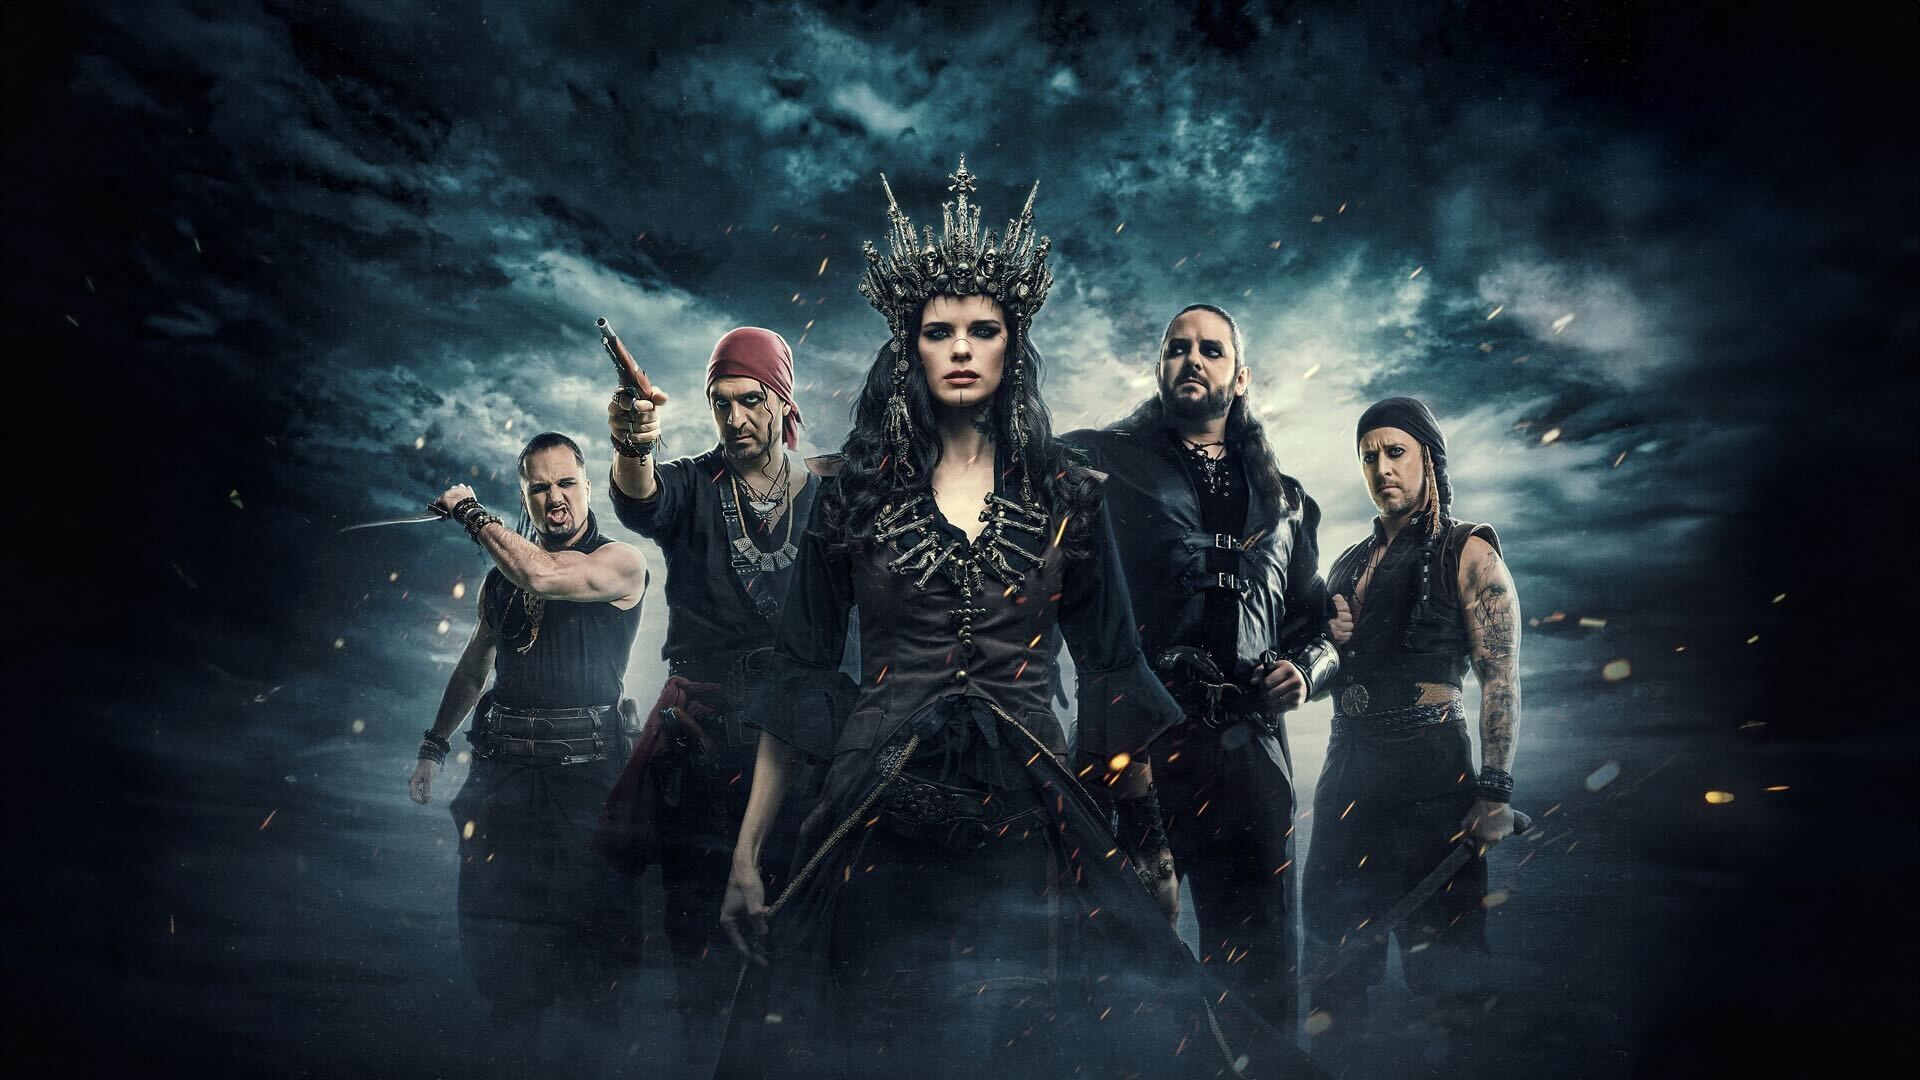 Visions Of Atlantis announces new album, "Pirates II Armada" out July